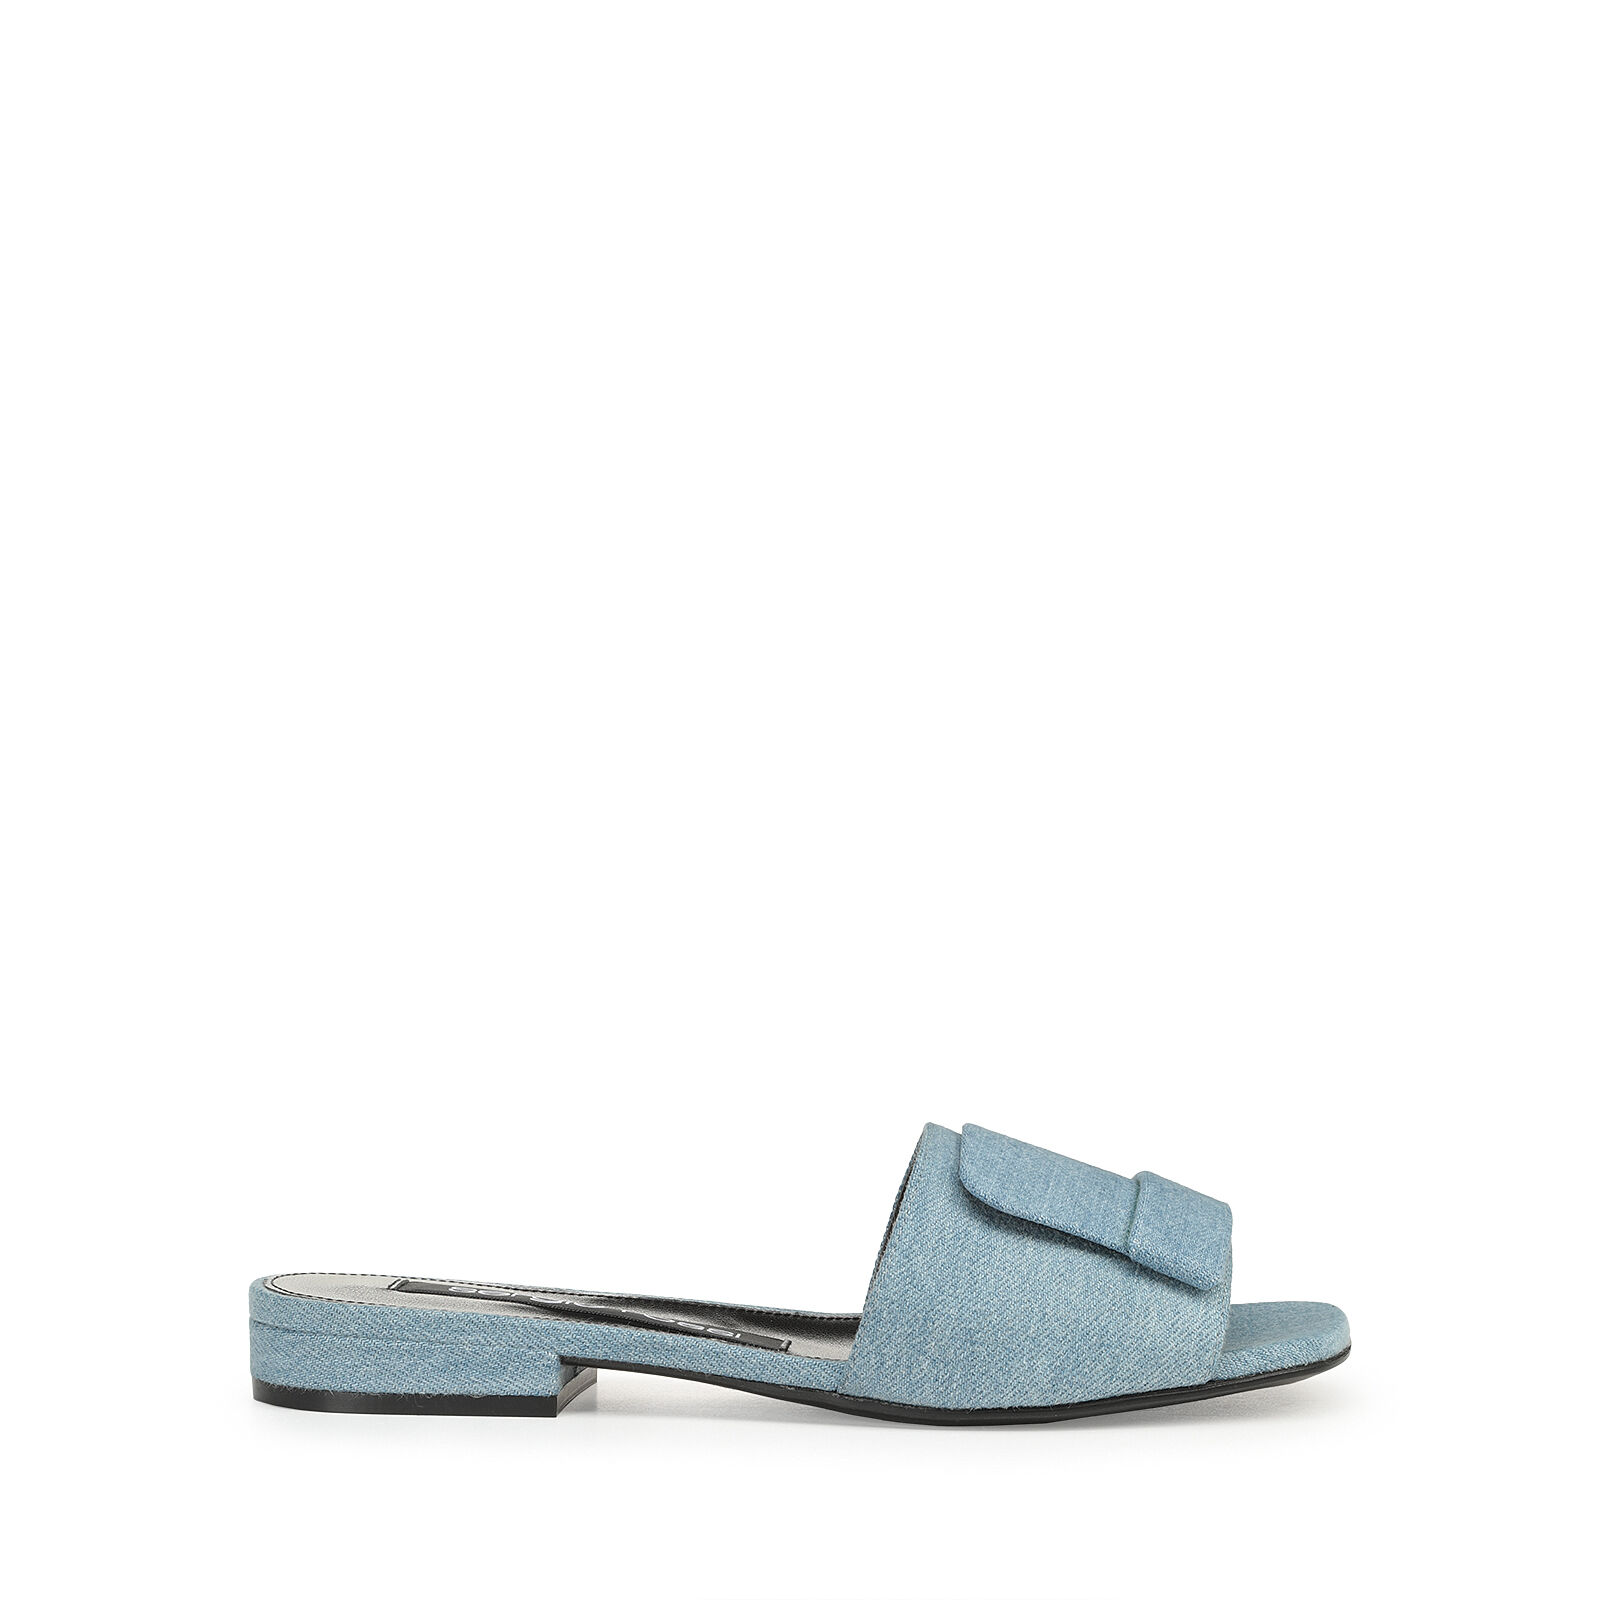 sr1 - Sandals Blue, 0